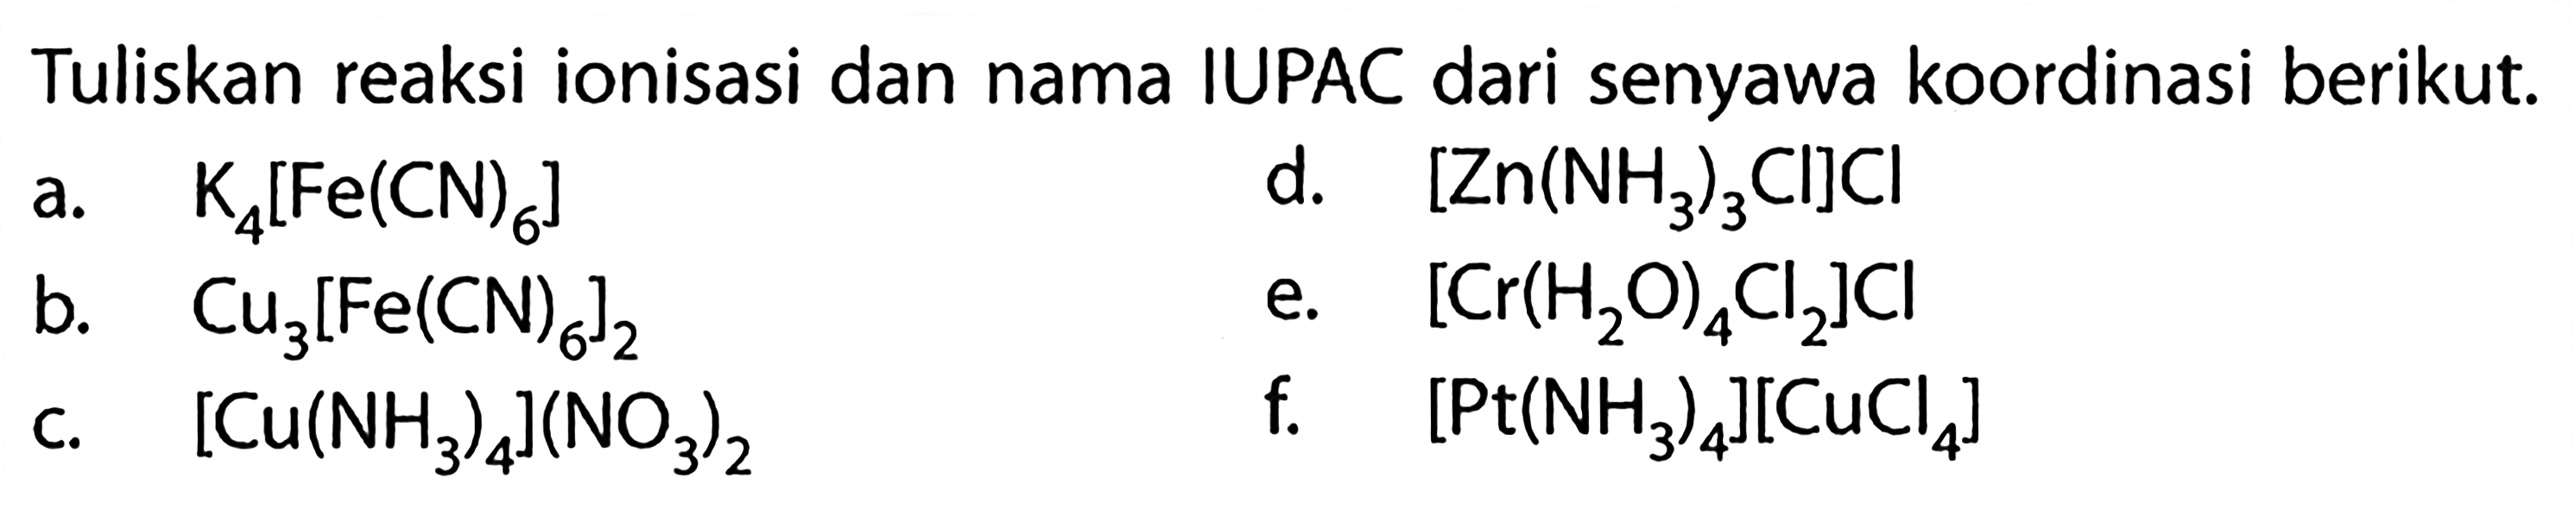 Tuliskan reaksi ionisasi dan nama IUPAC dari senyawa koordinasi berikut.a. K4[Fe(CN)6] d. [Zn(NH3)3 Cl]Cl b. Cu3[Fe(CN)6]2 e. [Cr(H2 O)4 Cl2]Cl c. [Cu(NH3)4](NO3)2 f. [Pt(NH3)4][CuCl4]  